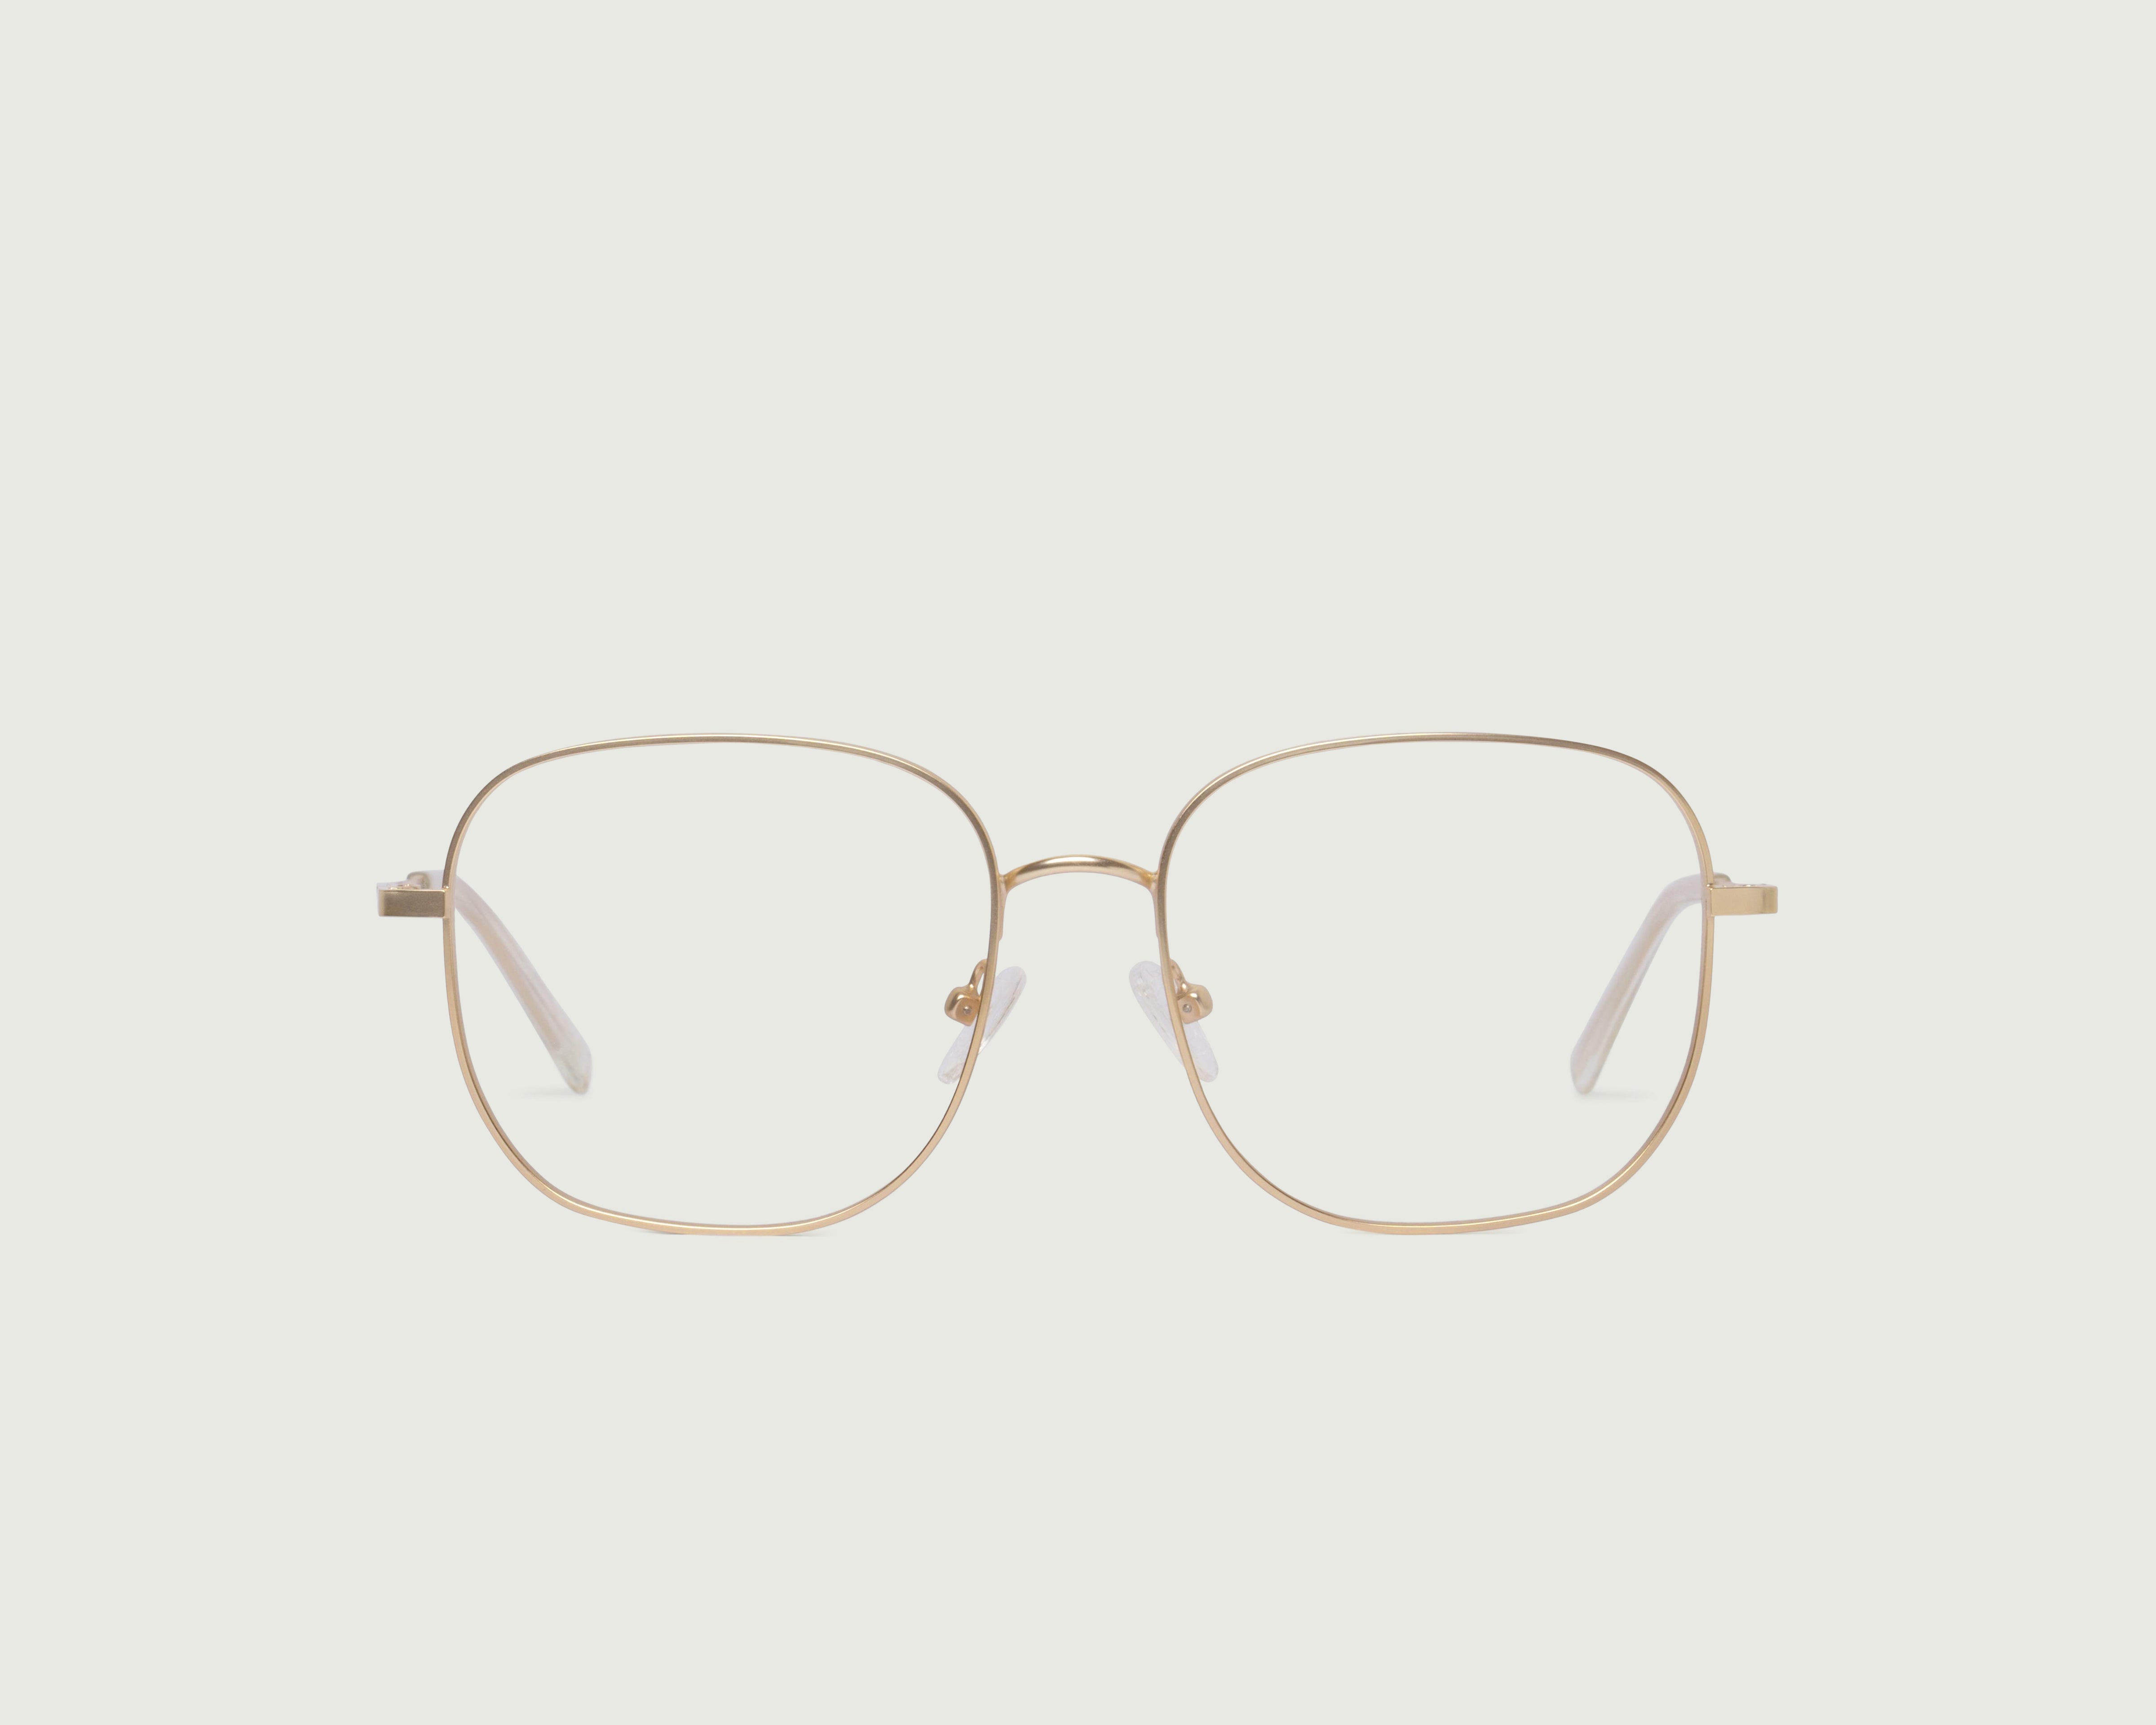 Tinsel::Noah Eyeglasses square gold metal front